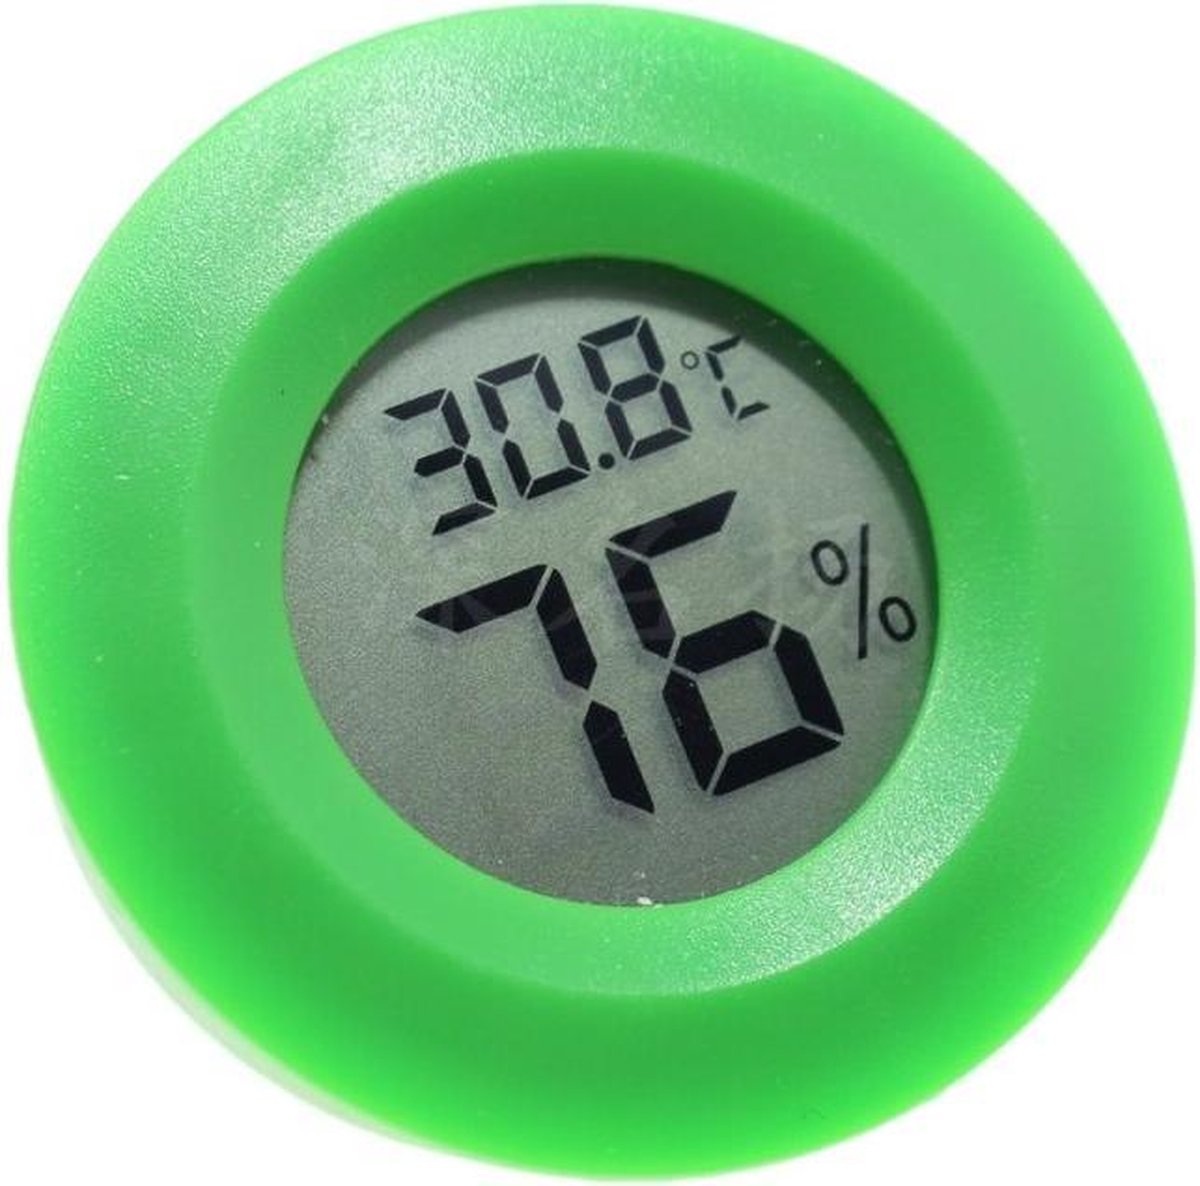 Vochtmeter Vochtigheidsmeter - Thermometer met HumidiMeter - Groen